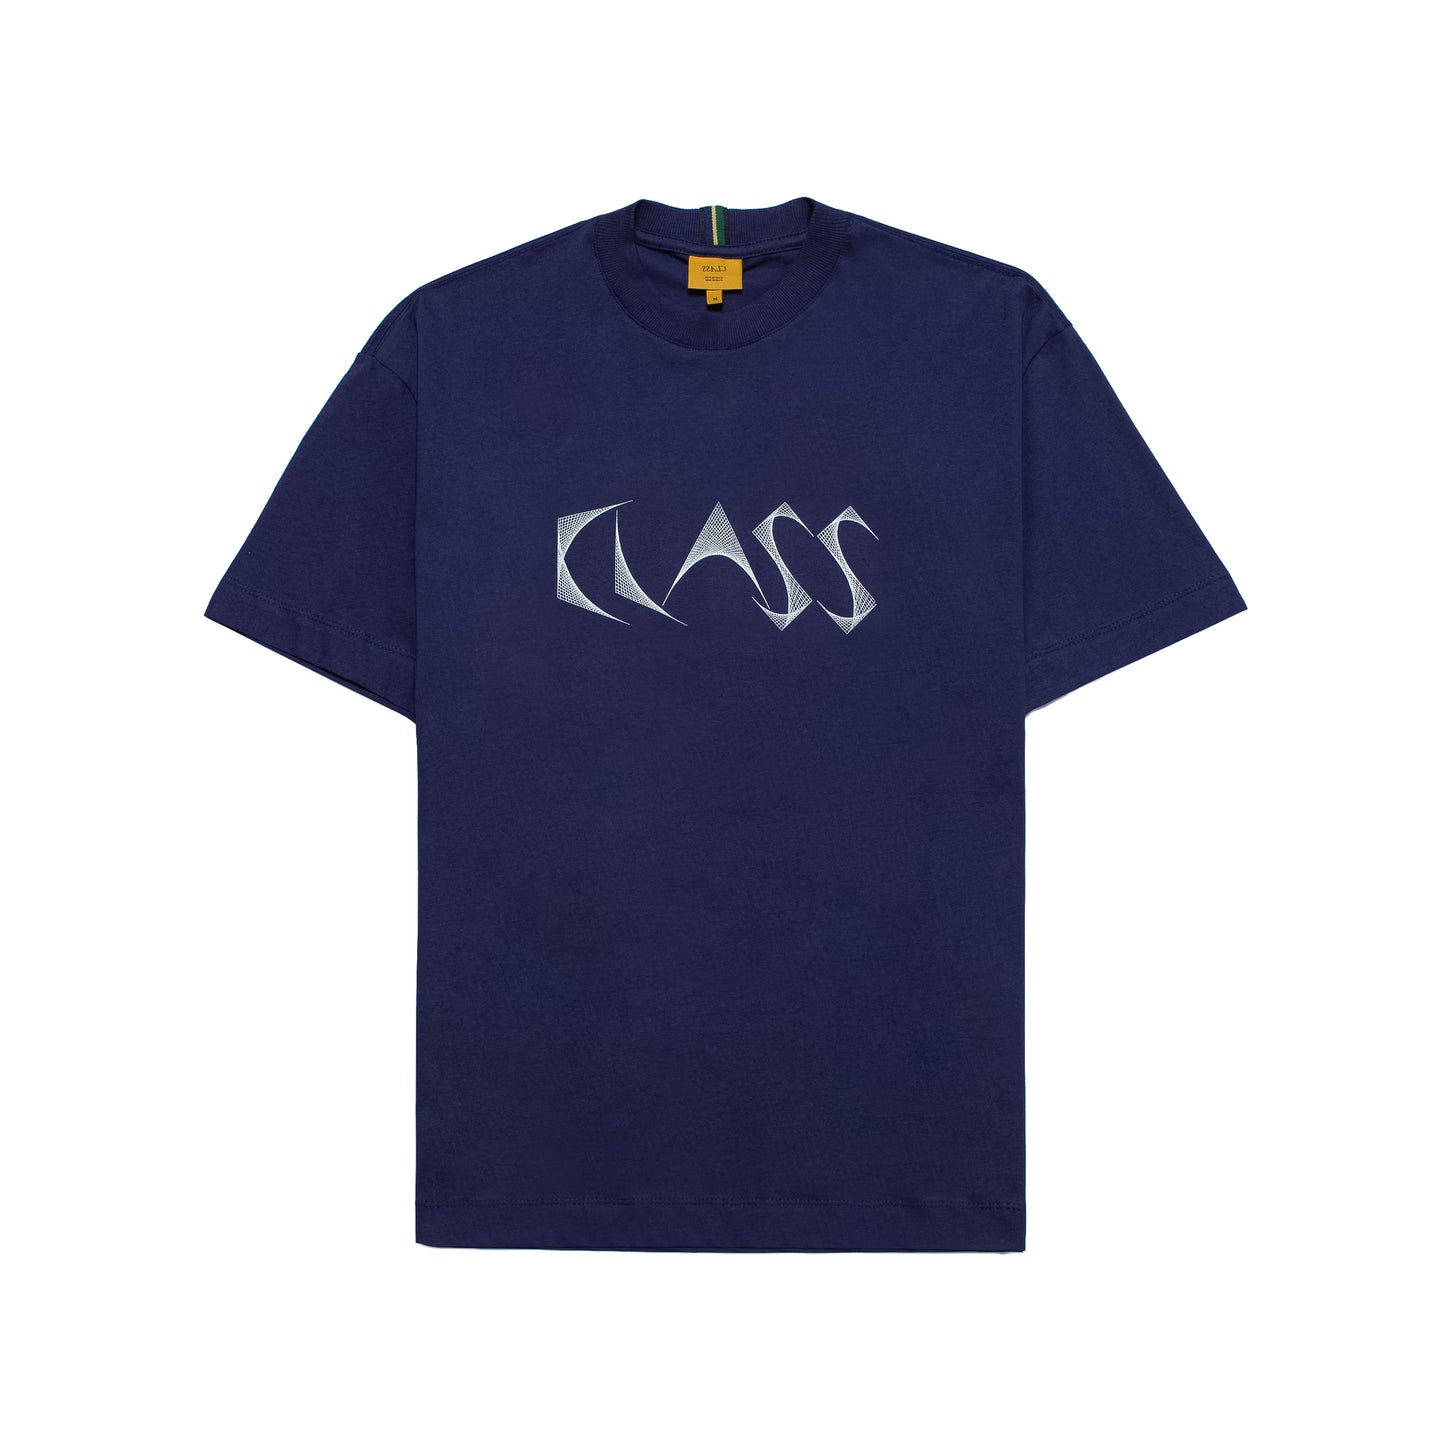 CLASS - Camiseta Geometriclass "Navy" - THE GAME